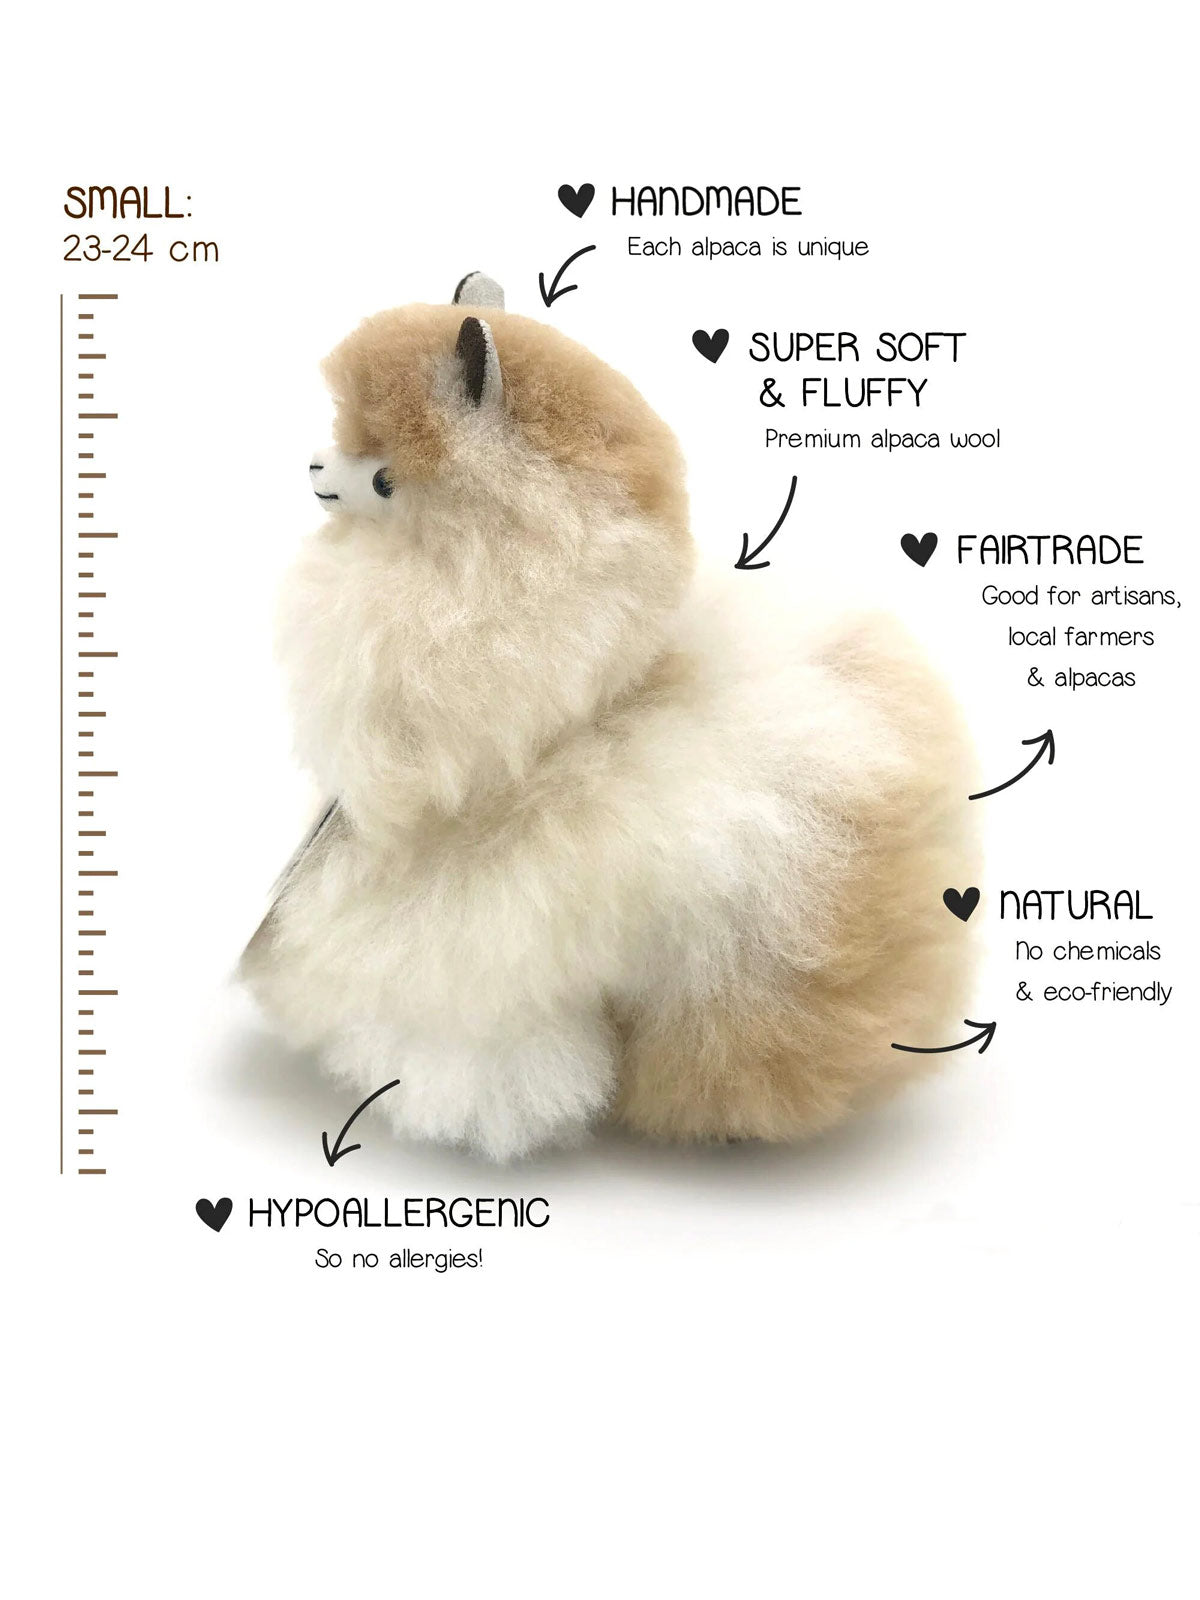 Inkari Alpaca soft toy-Naturals-SAHARA-Small 23cm